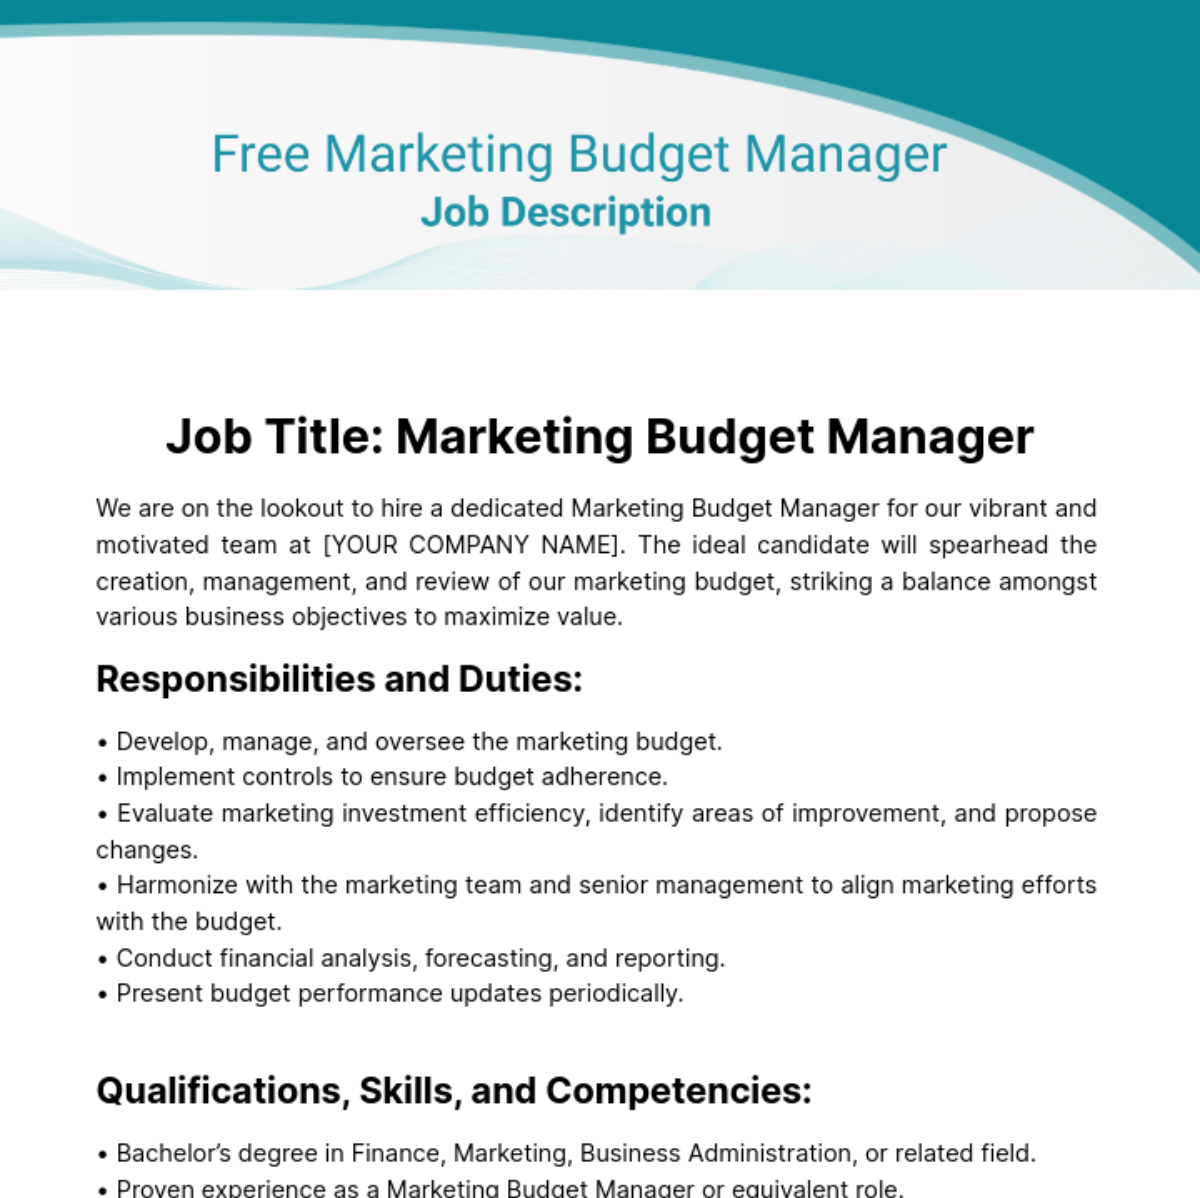 Free Marketing Budget Manager Job Description Template